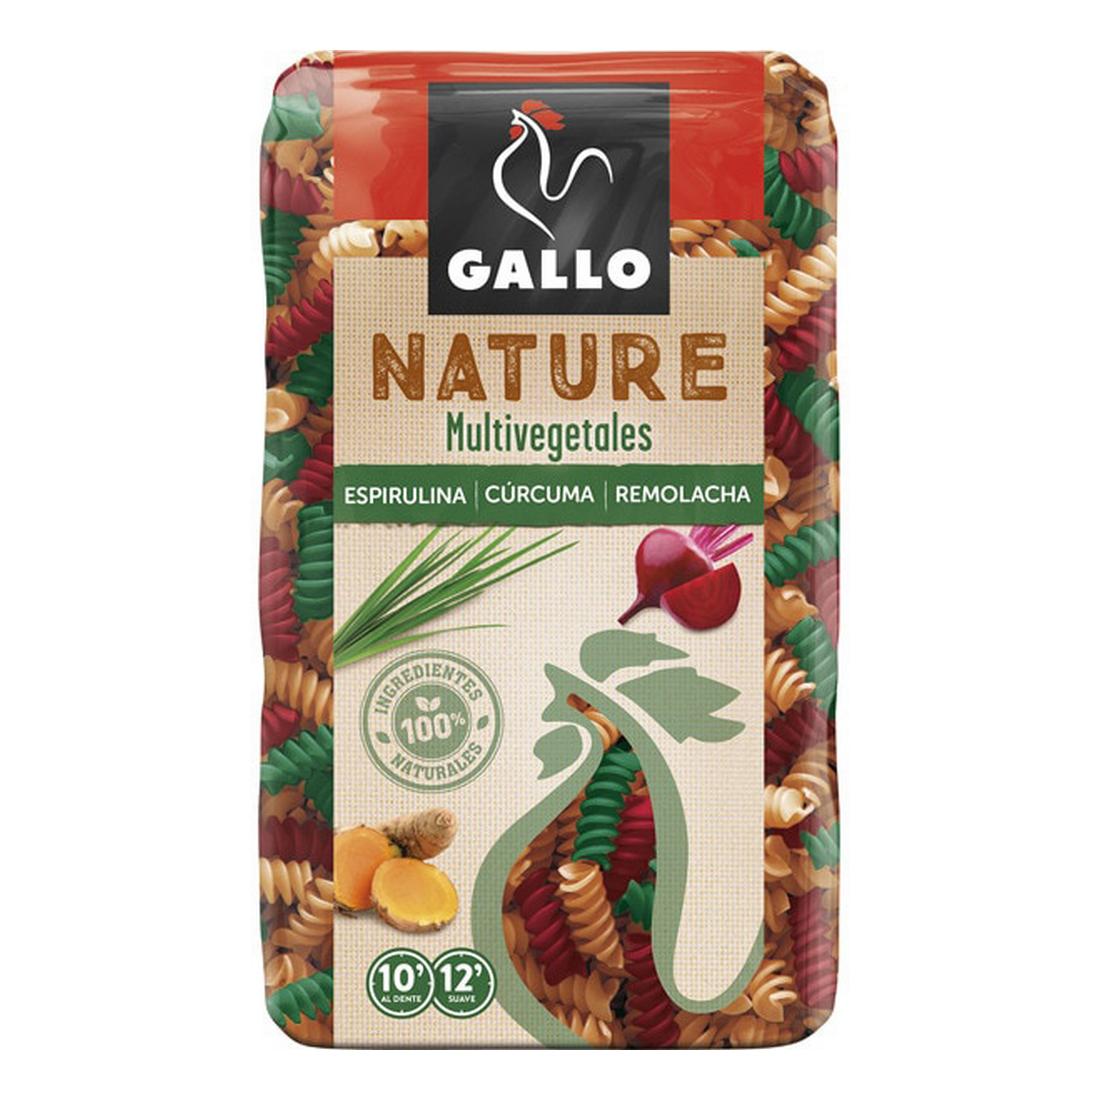 Pâtes al Dente Gallo Nature Végétales (400 g)